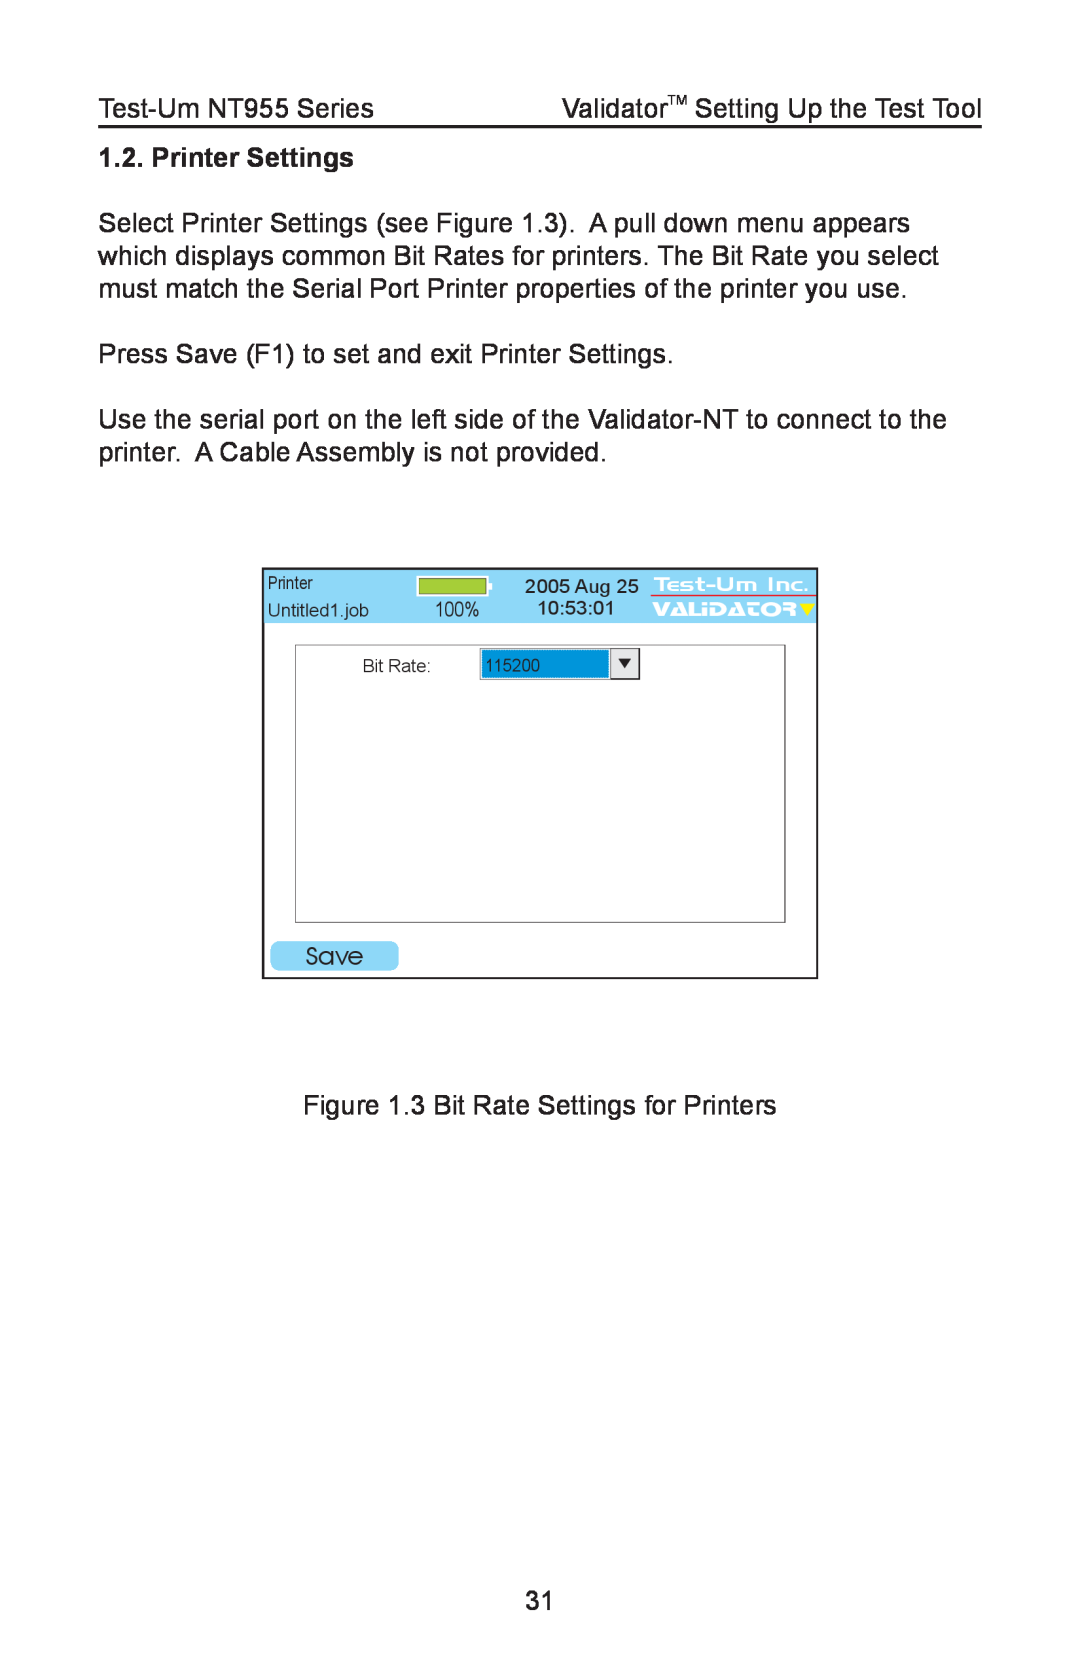 Test-Um NT955 operating instructions Printer Settings, Save 